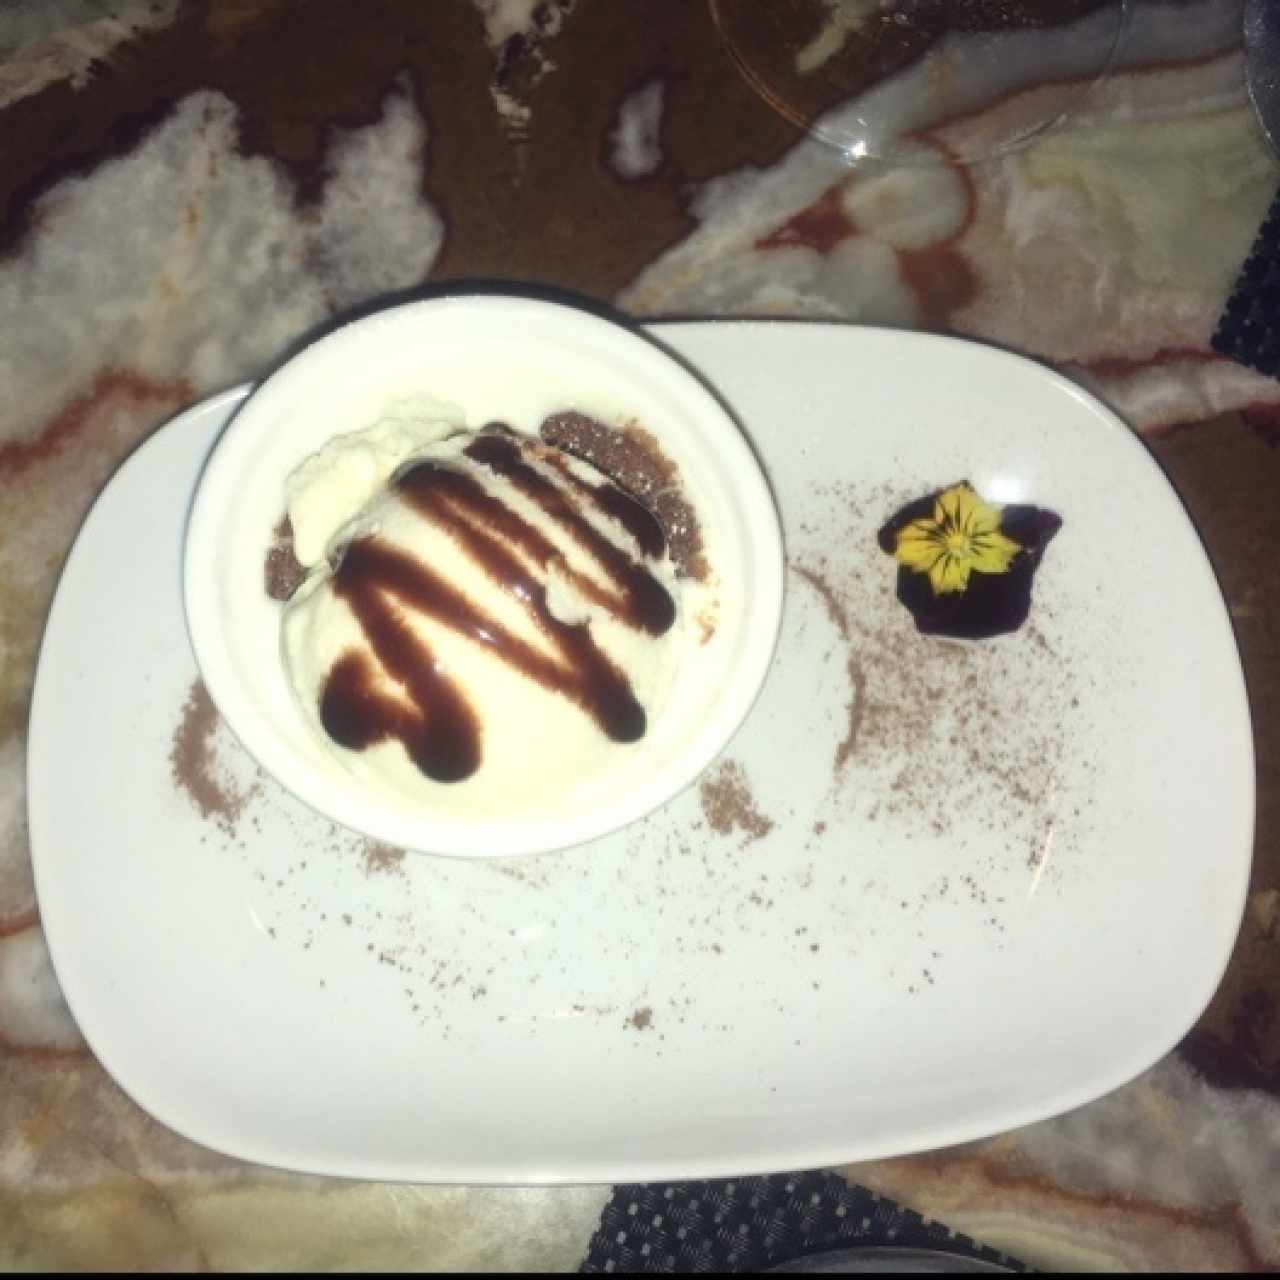 Volcán de chocolate con helado de canela